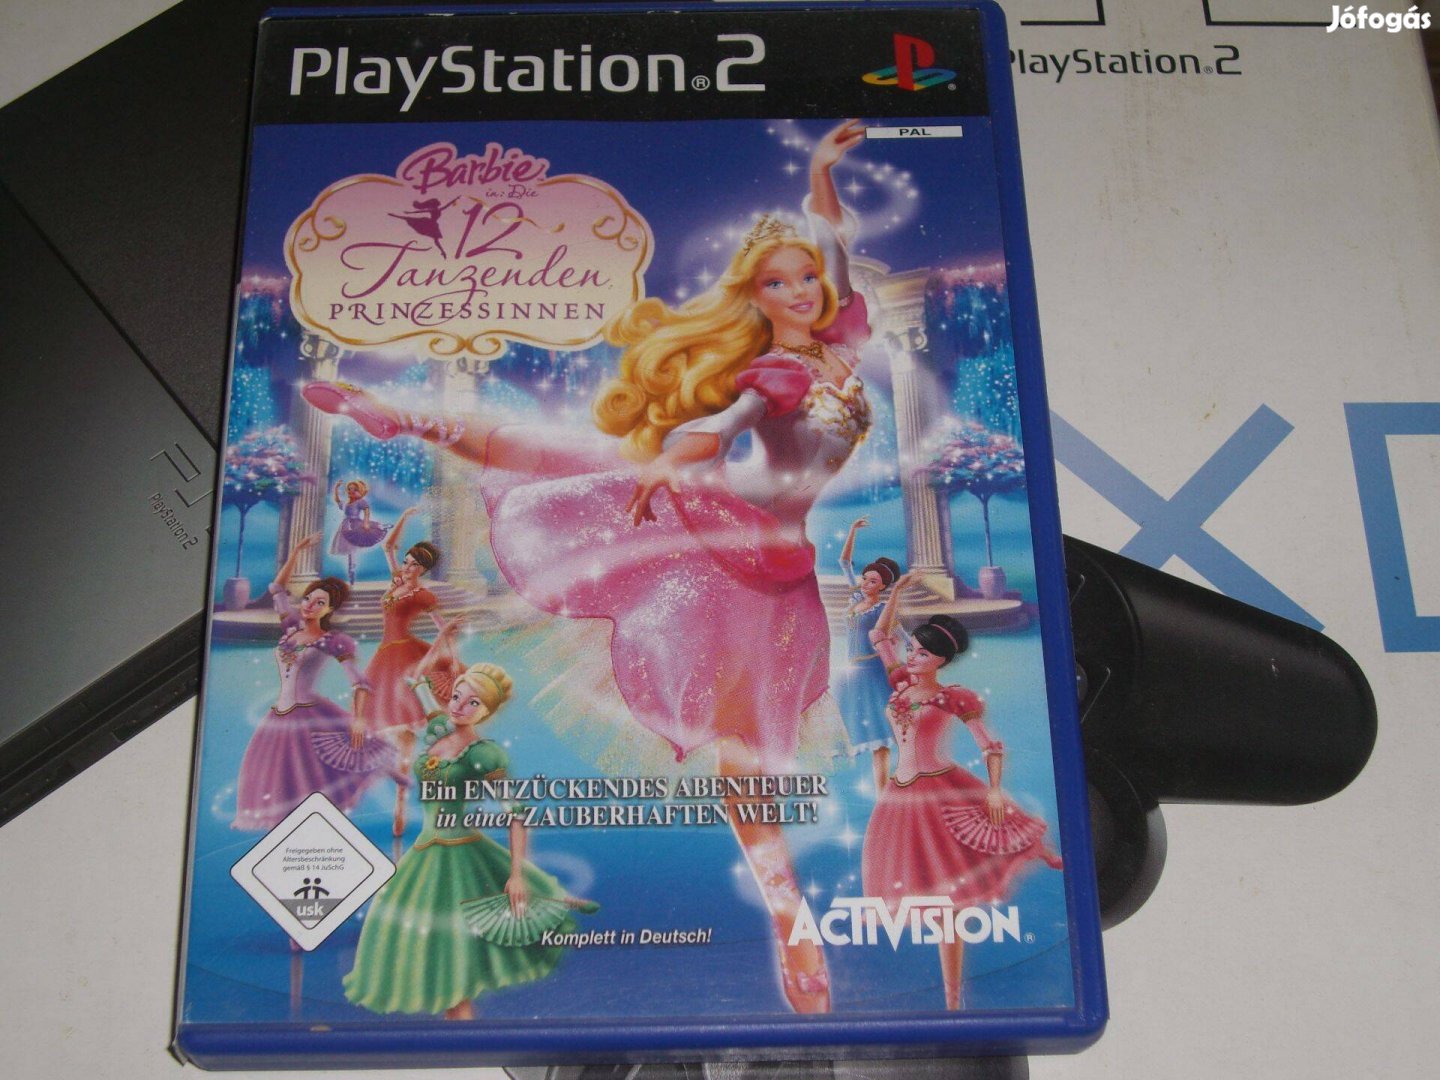 Barbie 12 Tanzenden Prinzessinnen Playstation 2 eredeti lemez eladó